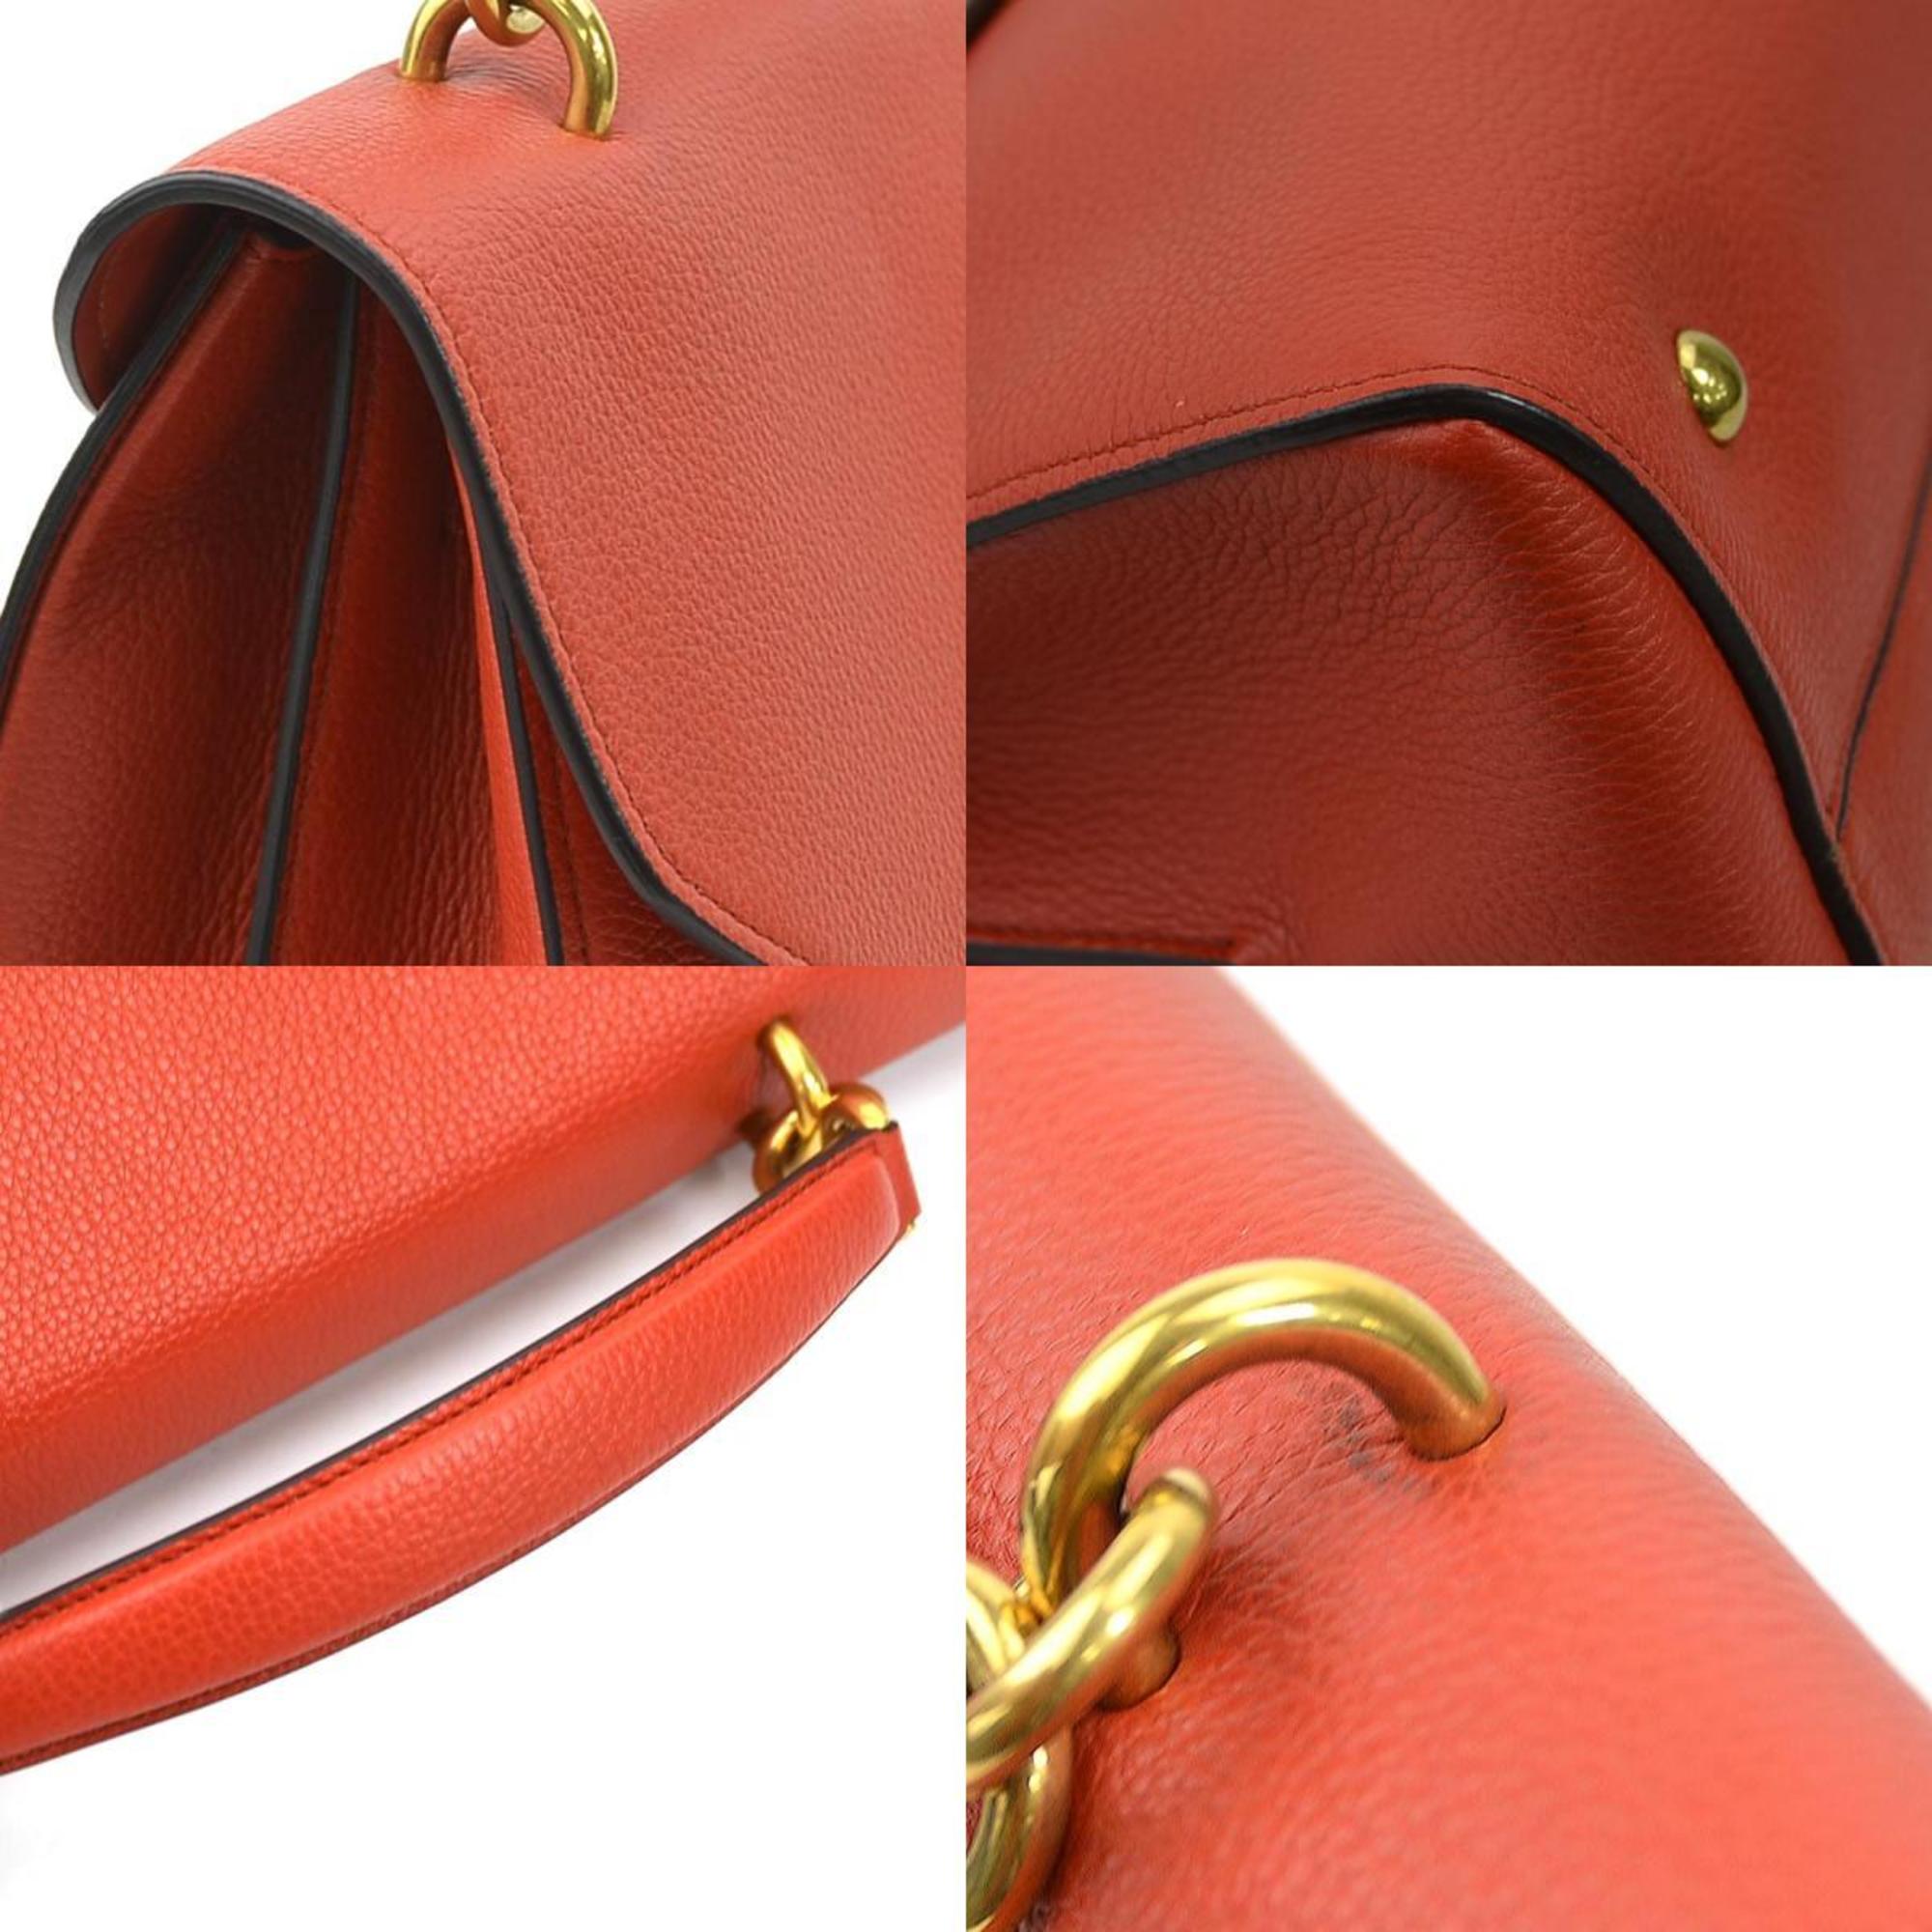 Salvatore Ferragamo Handbag Shoulder Bag Gancini Leather Red Gold Ladies